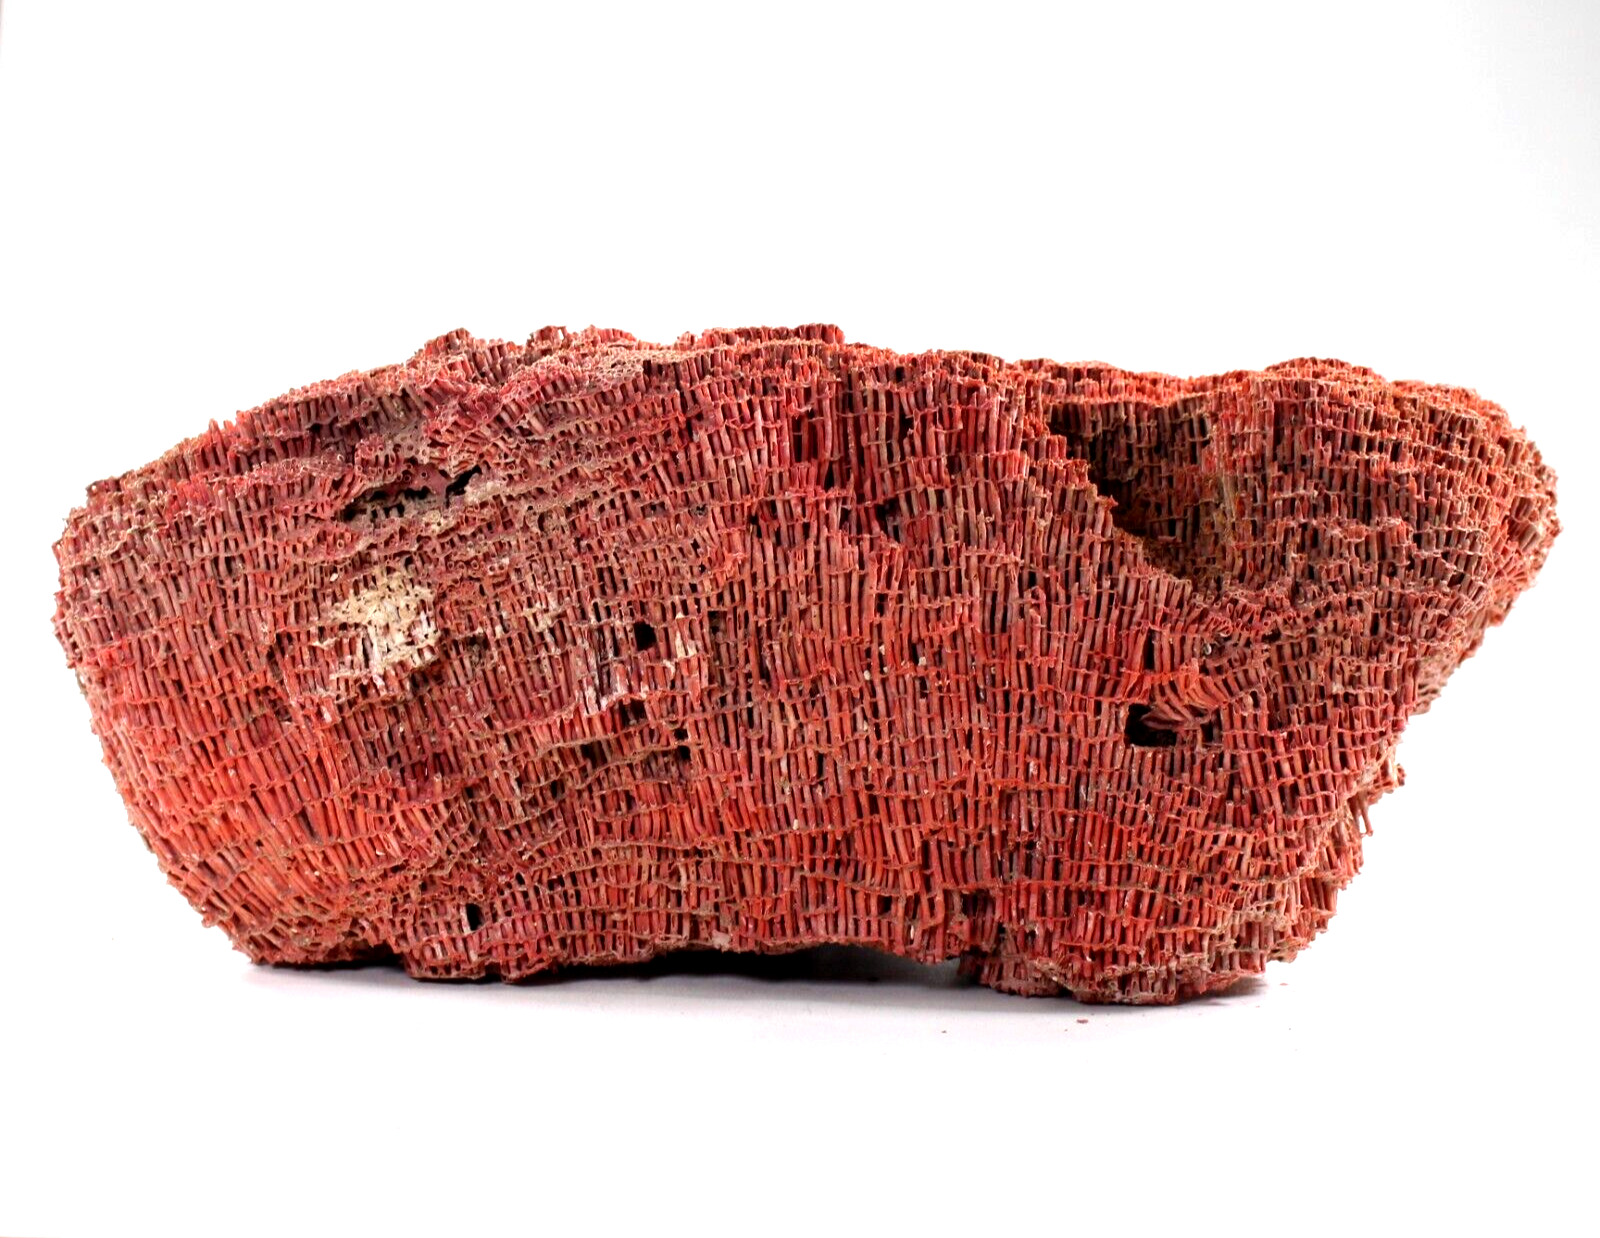 13LB Natural Red Coral Reef Extra Large Cluster Ocean Mineral Crystal Specimen